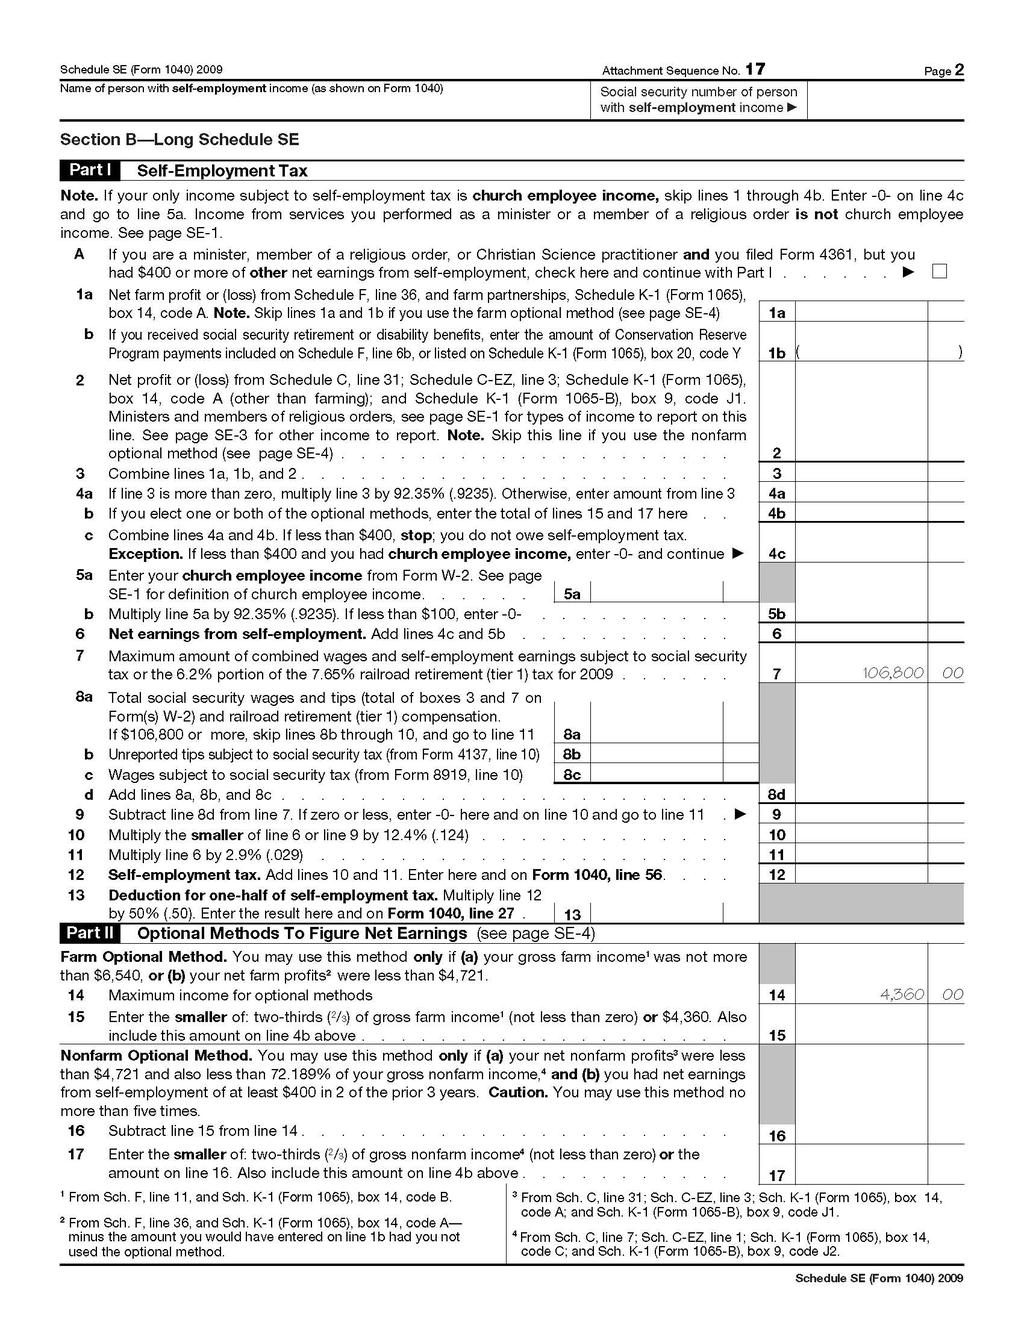 Page 2 of Schedule SE Copyright 2010, Smart Money, LLC